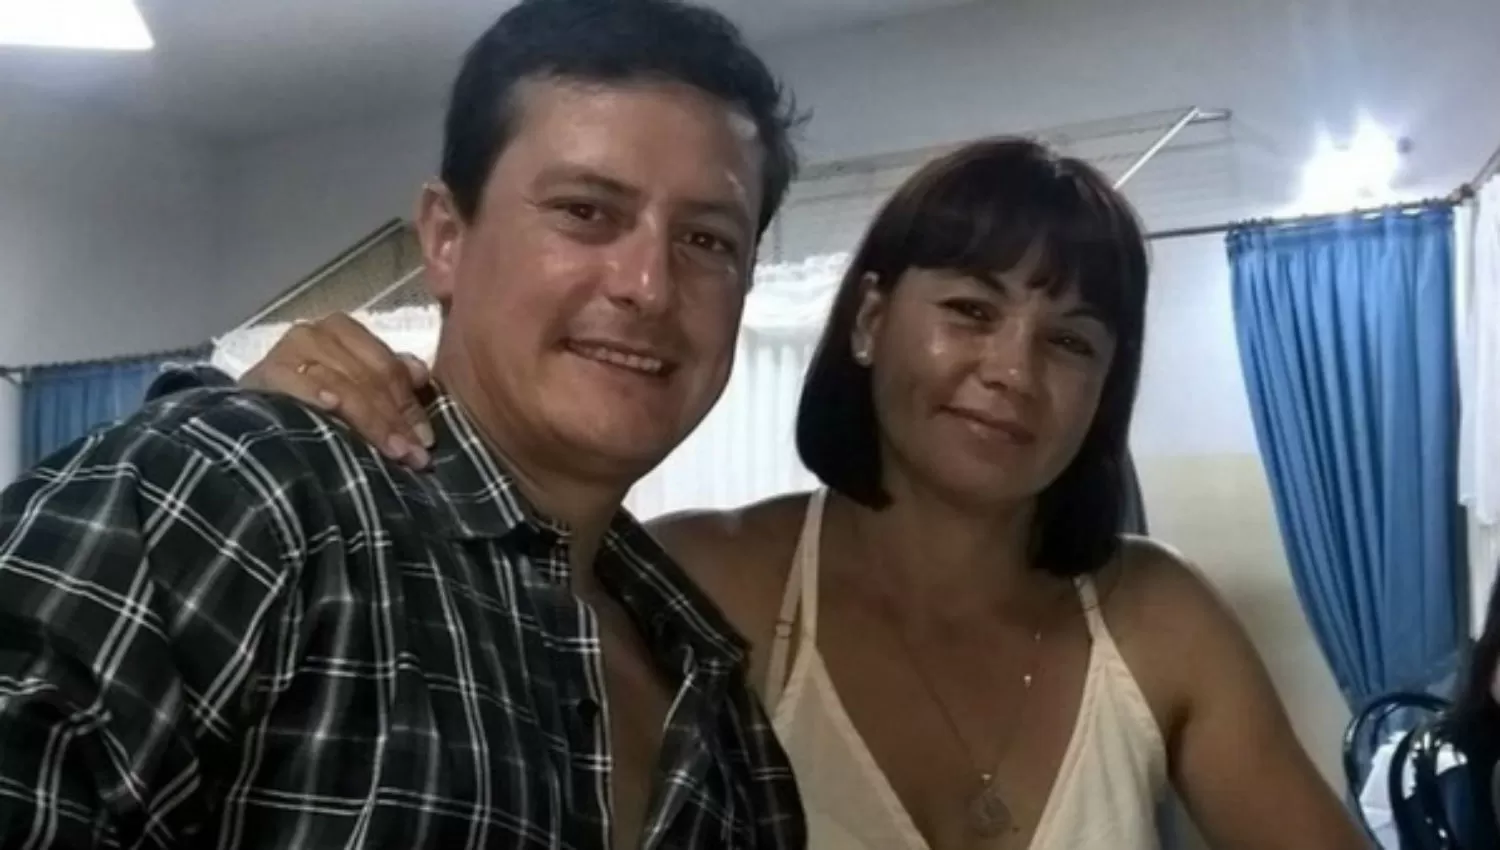 TRAGEDIA. Adhemar Albornoz y Silvia Pérez cayeron al Río Paraná

